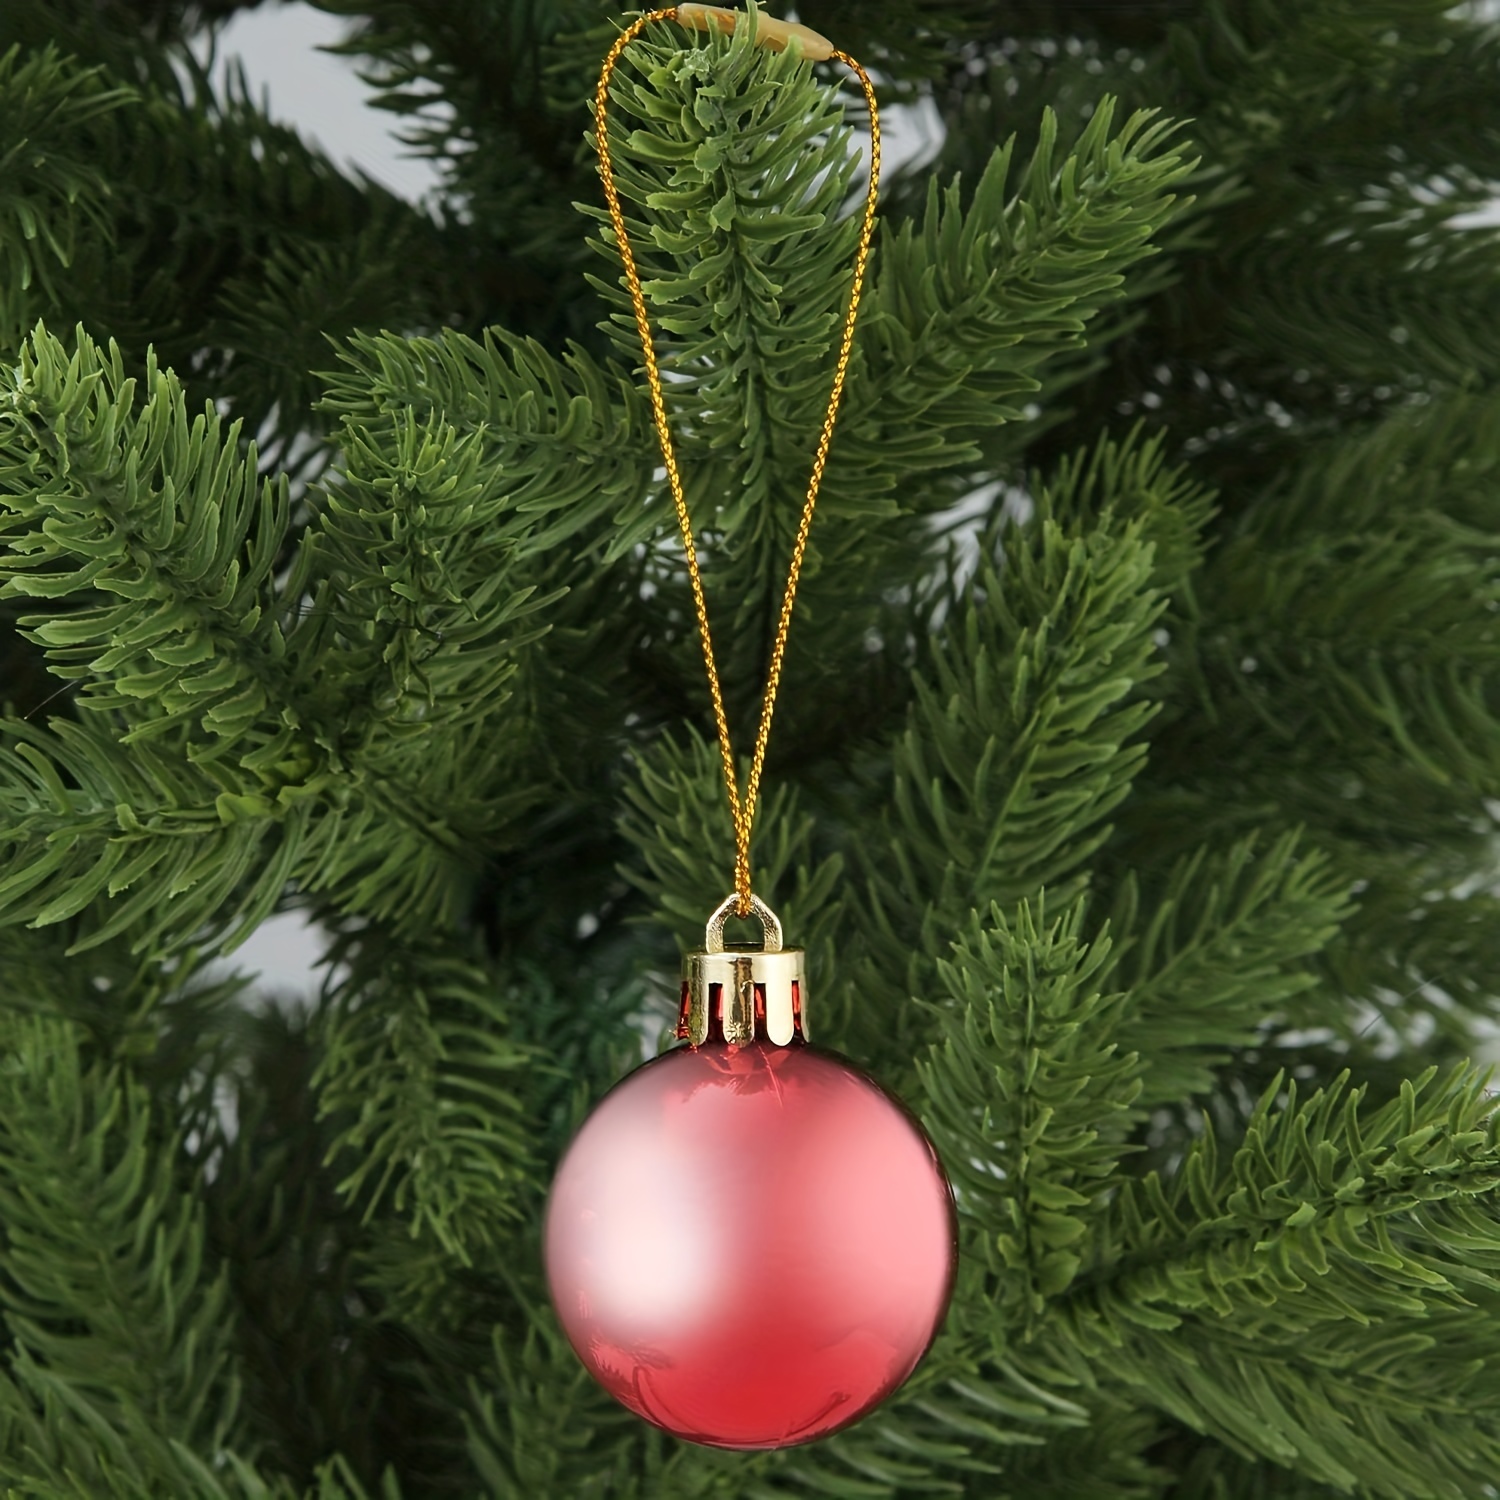 100pcs Christmas Ornament String for Christmas Tree Ornament Hooks Precut Ribbon Ornament Hangers Snap Locking String Fasteners Ropes for Christmas